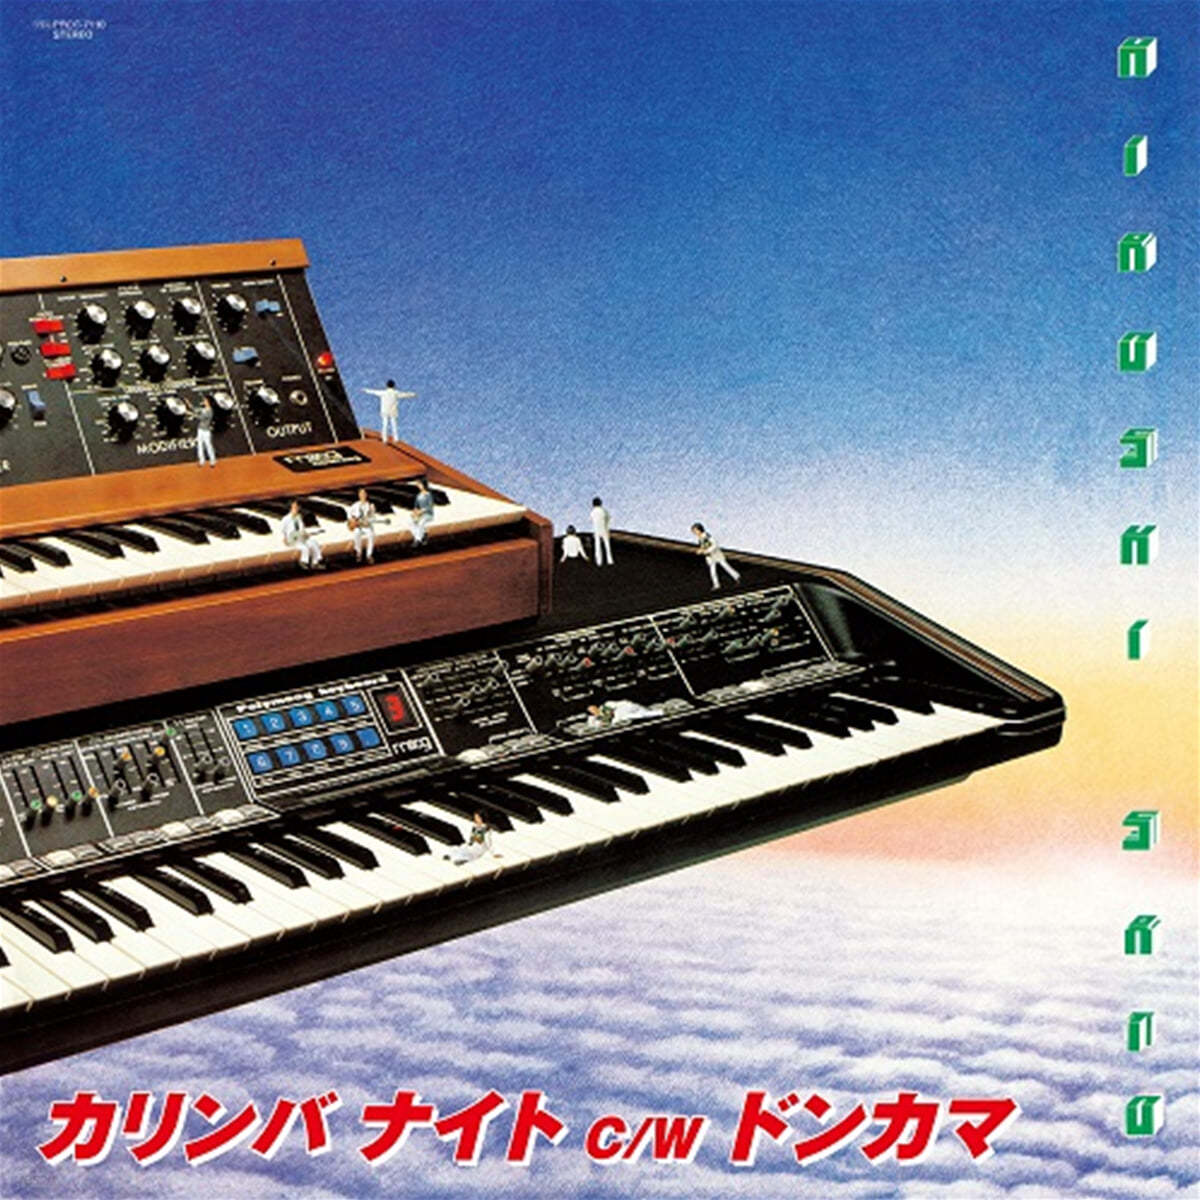 Sato Hiroshi (사토 히로시) - Kalimba Night / Doncama [7인치 싱글 Vinyl]  